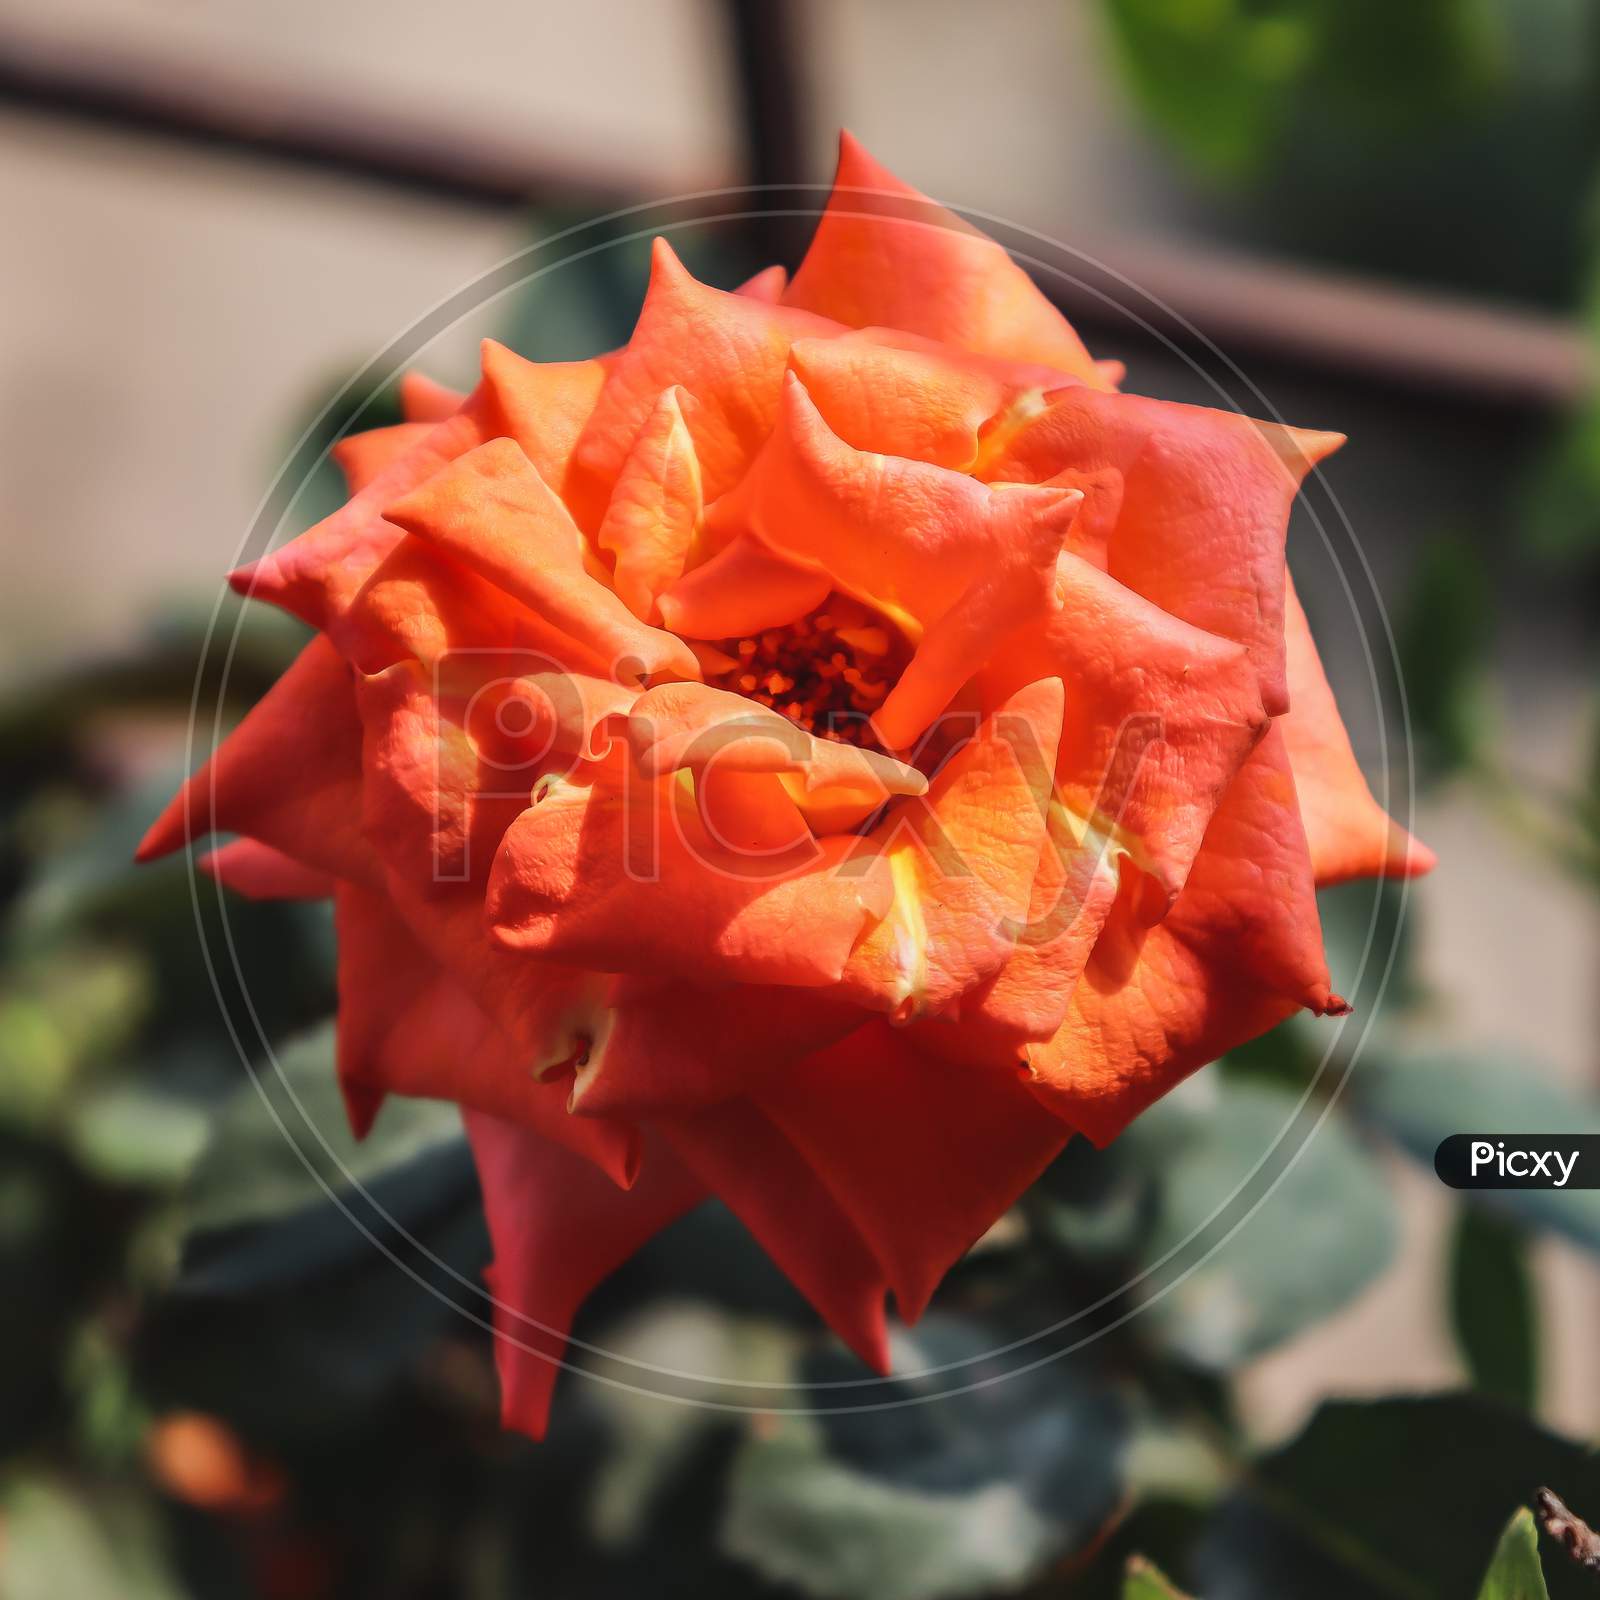 Hybrid tea rose flower look so beautiful